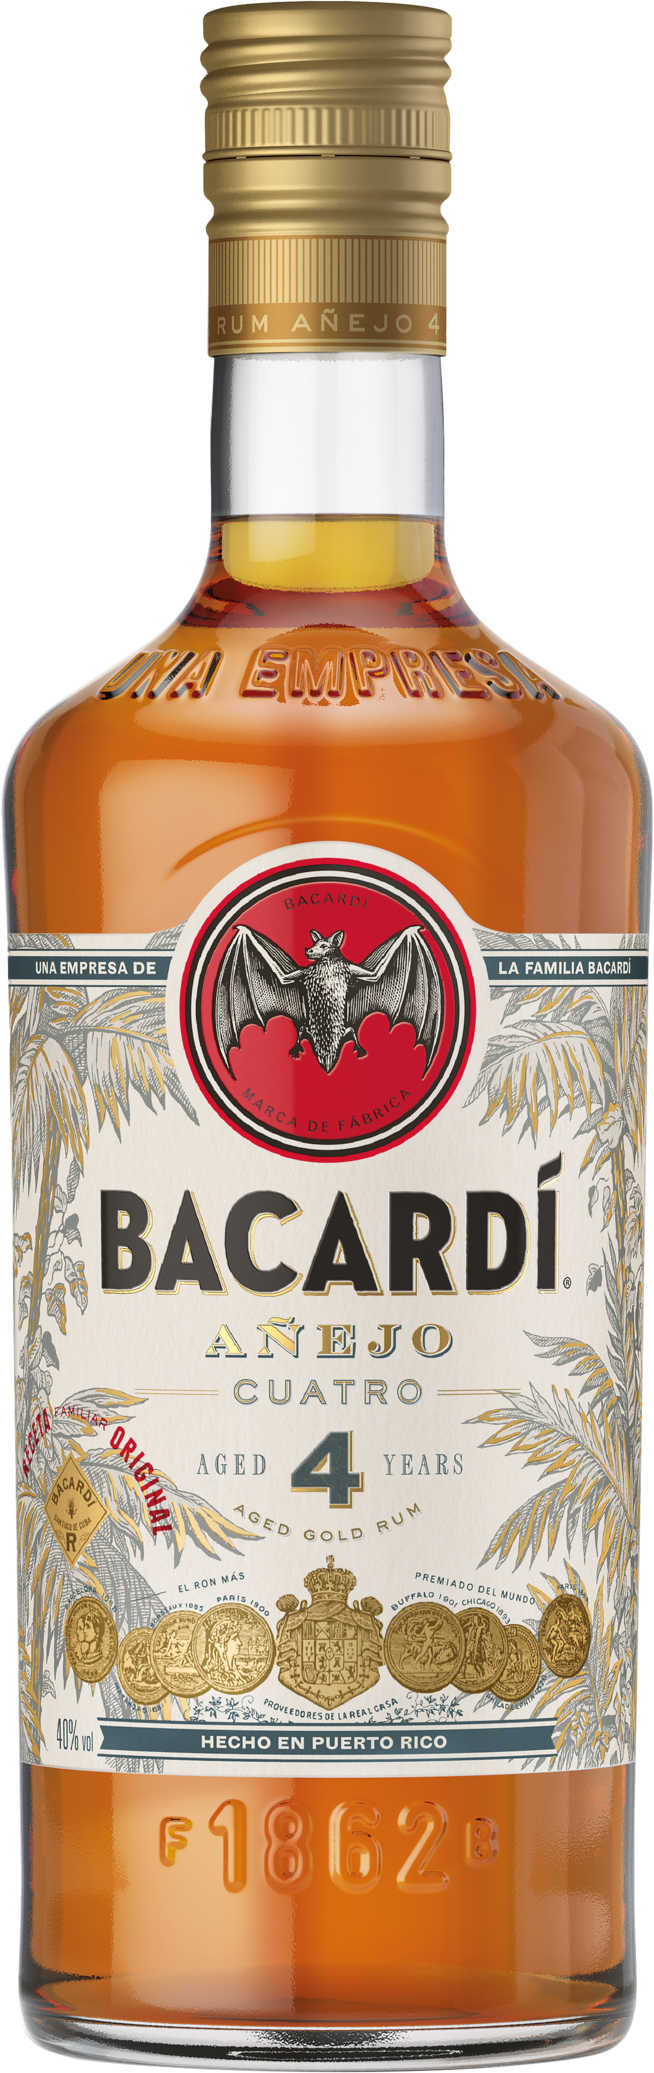 Bacardi 4 Jahre Anejo Cuatro Rum 40% 0,7l